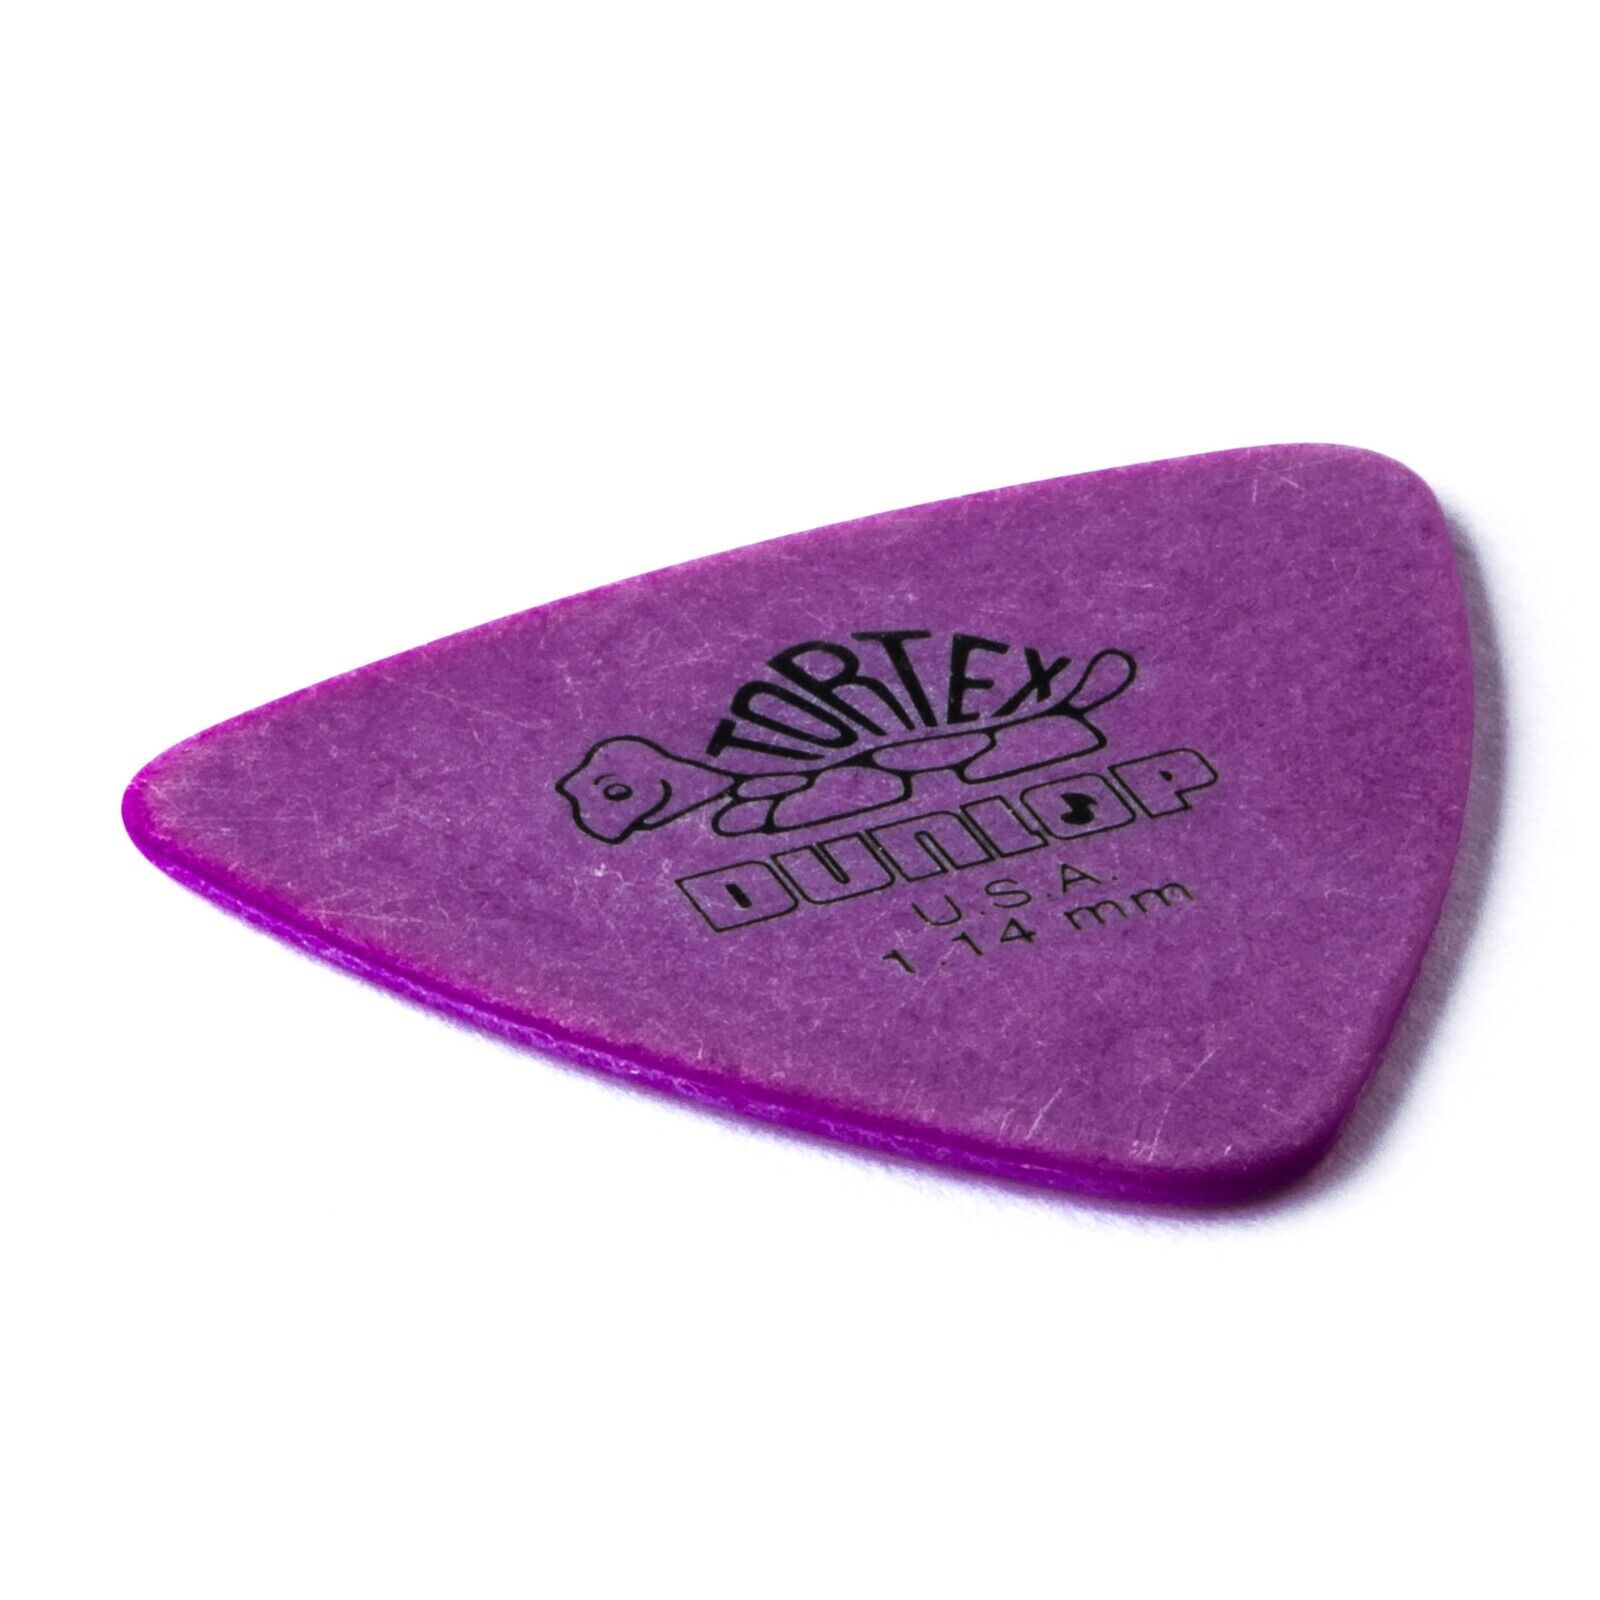 Dunlop Guitar Picks Tortex Tri (Triangle) 72 Pack 1.14mm 431R1.14 Dunlop 431R1.14 - фотография #4